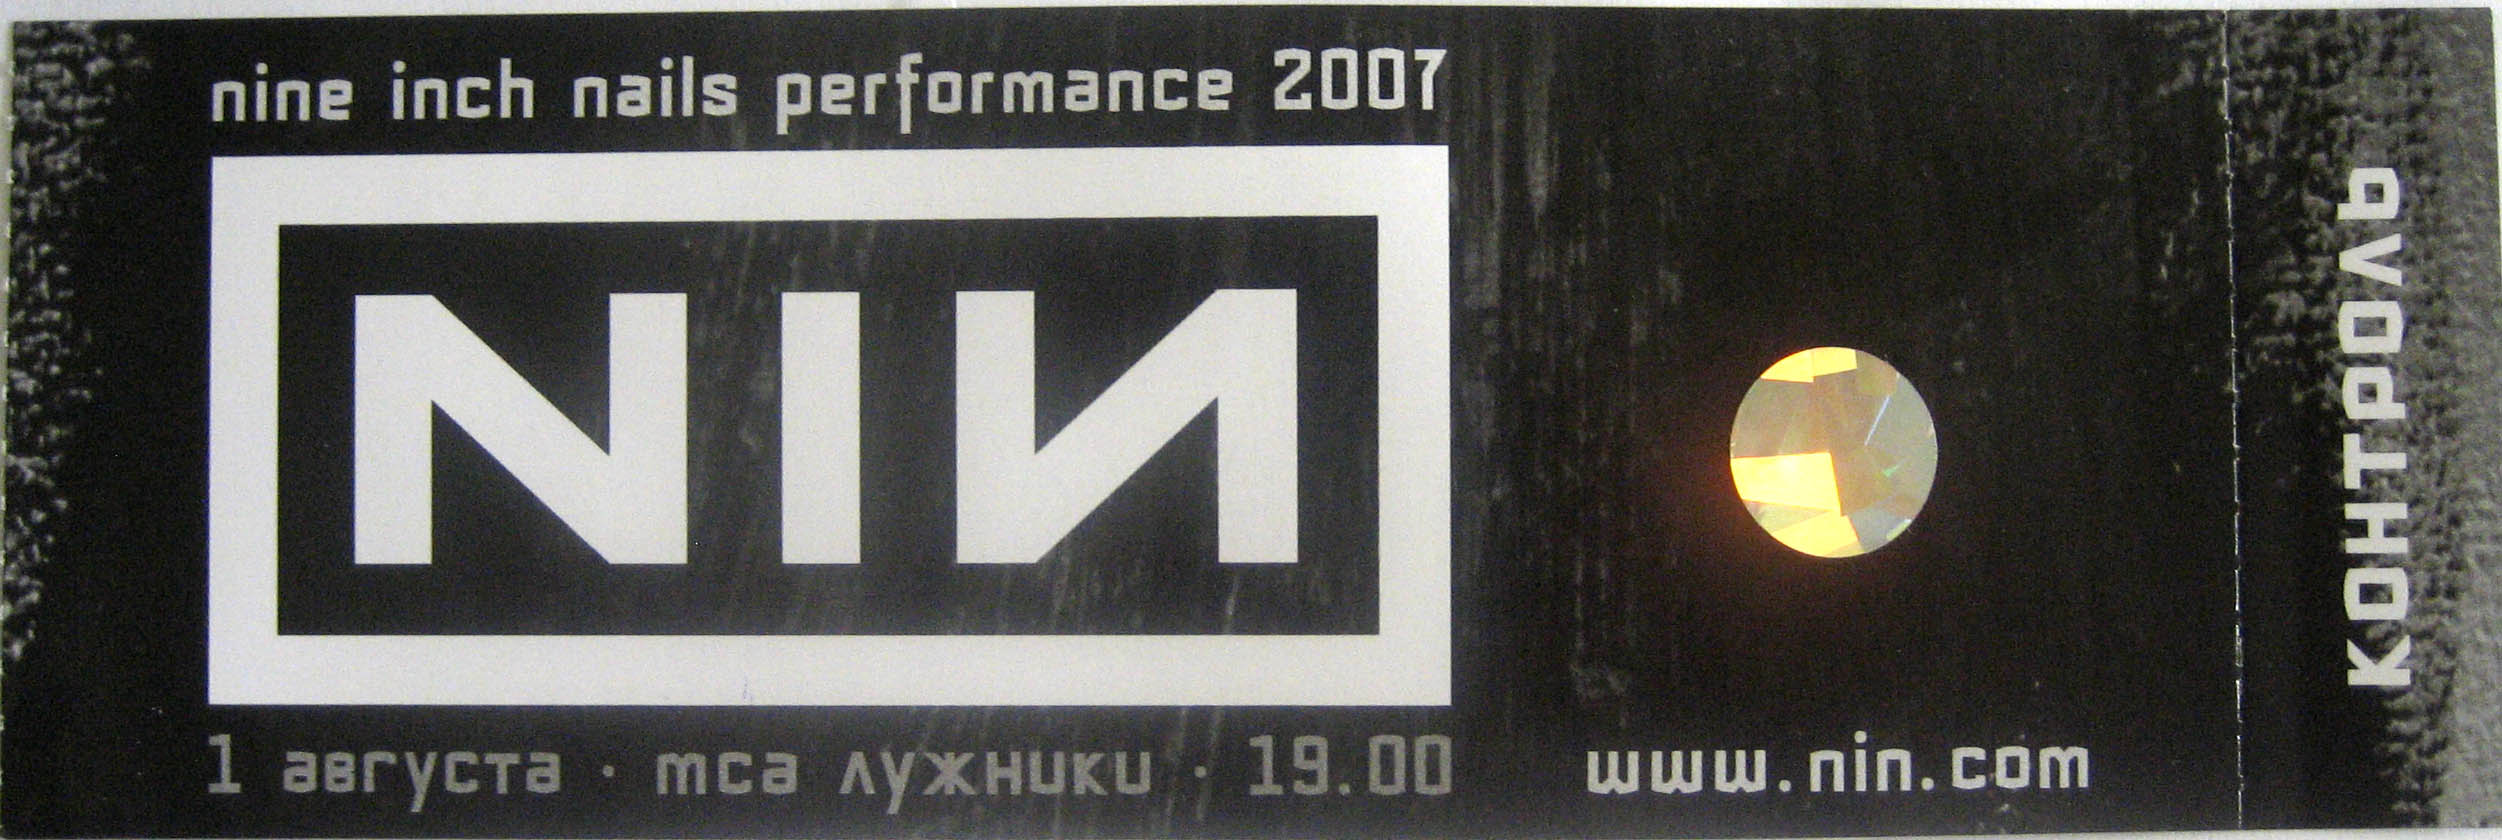 2007/08/01 Ticket